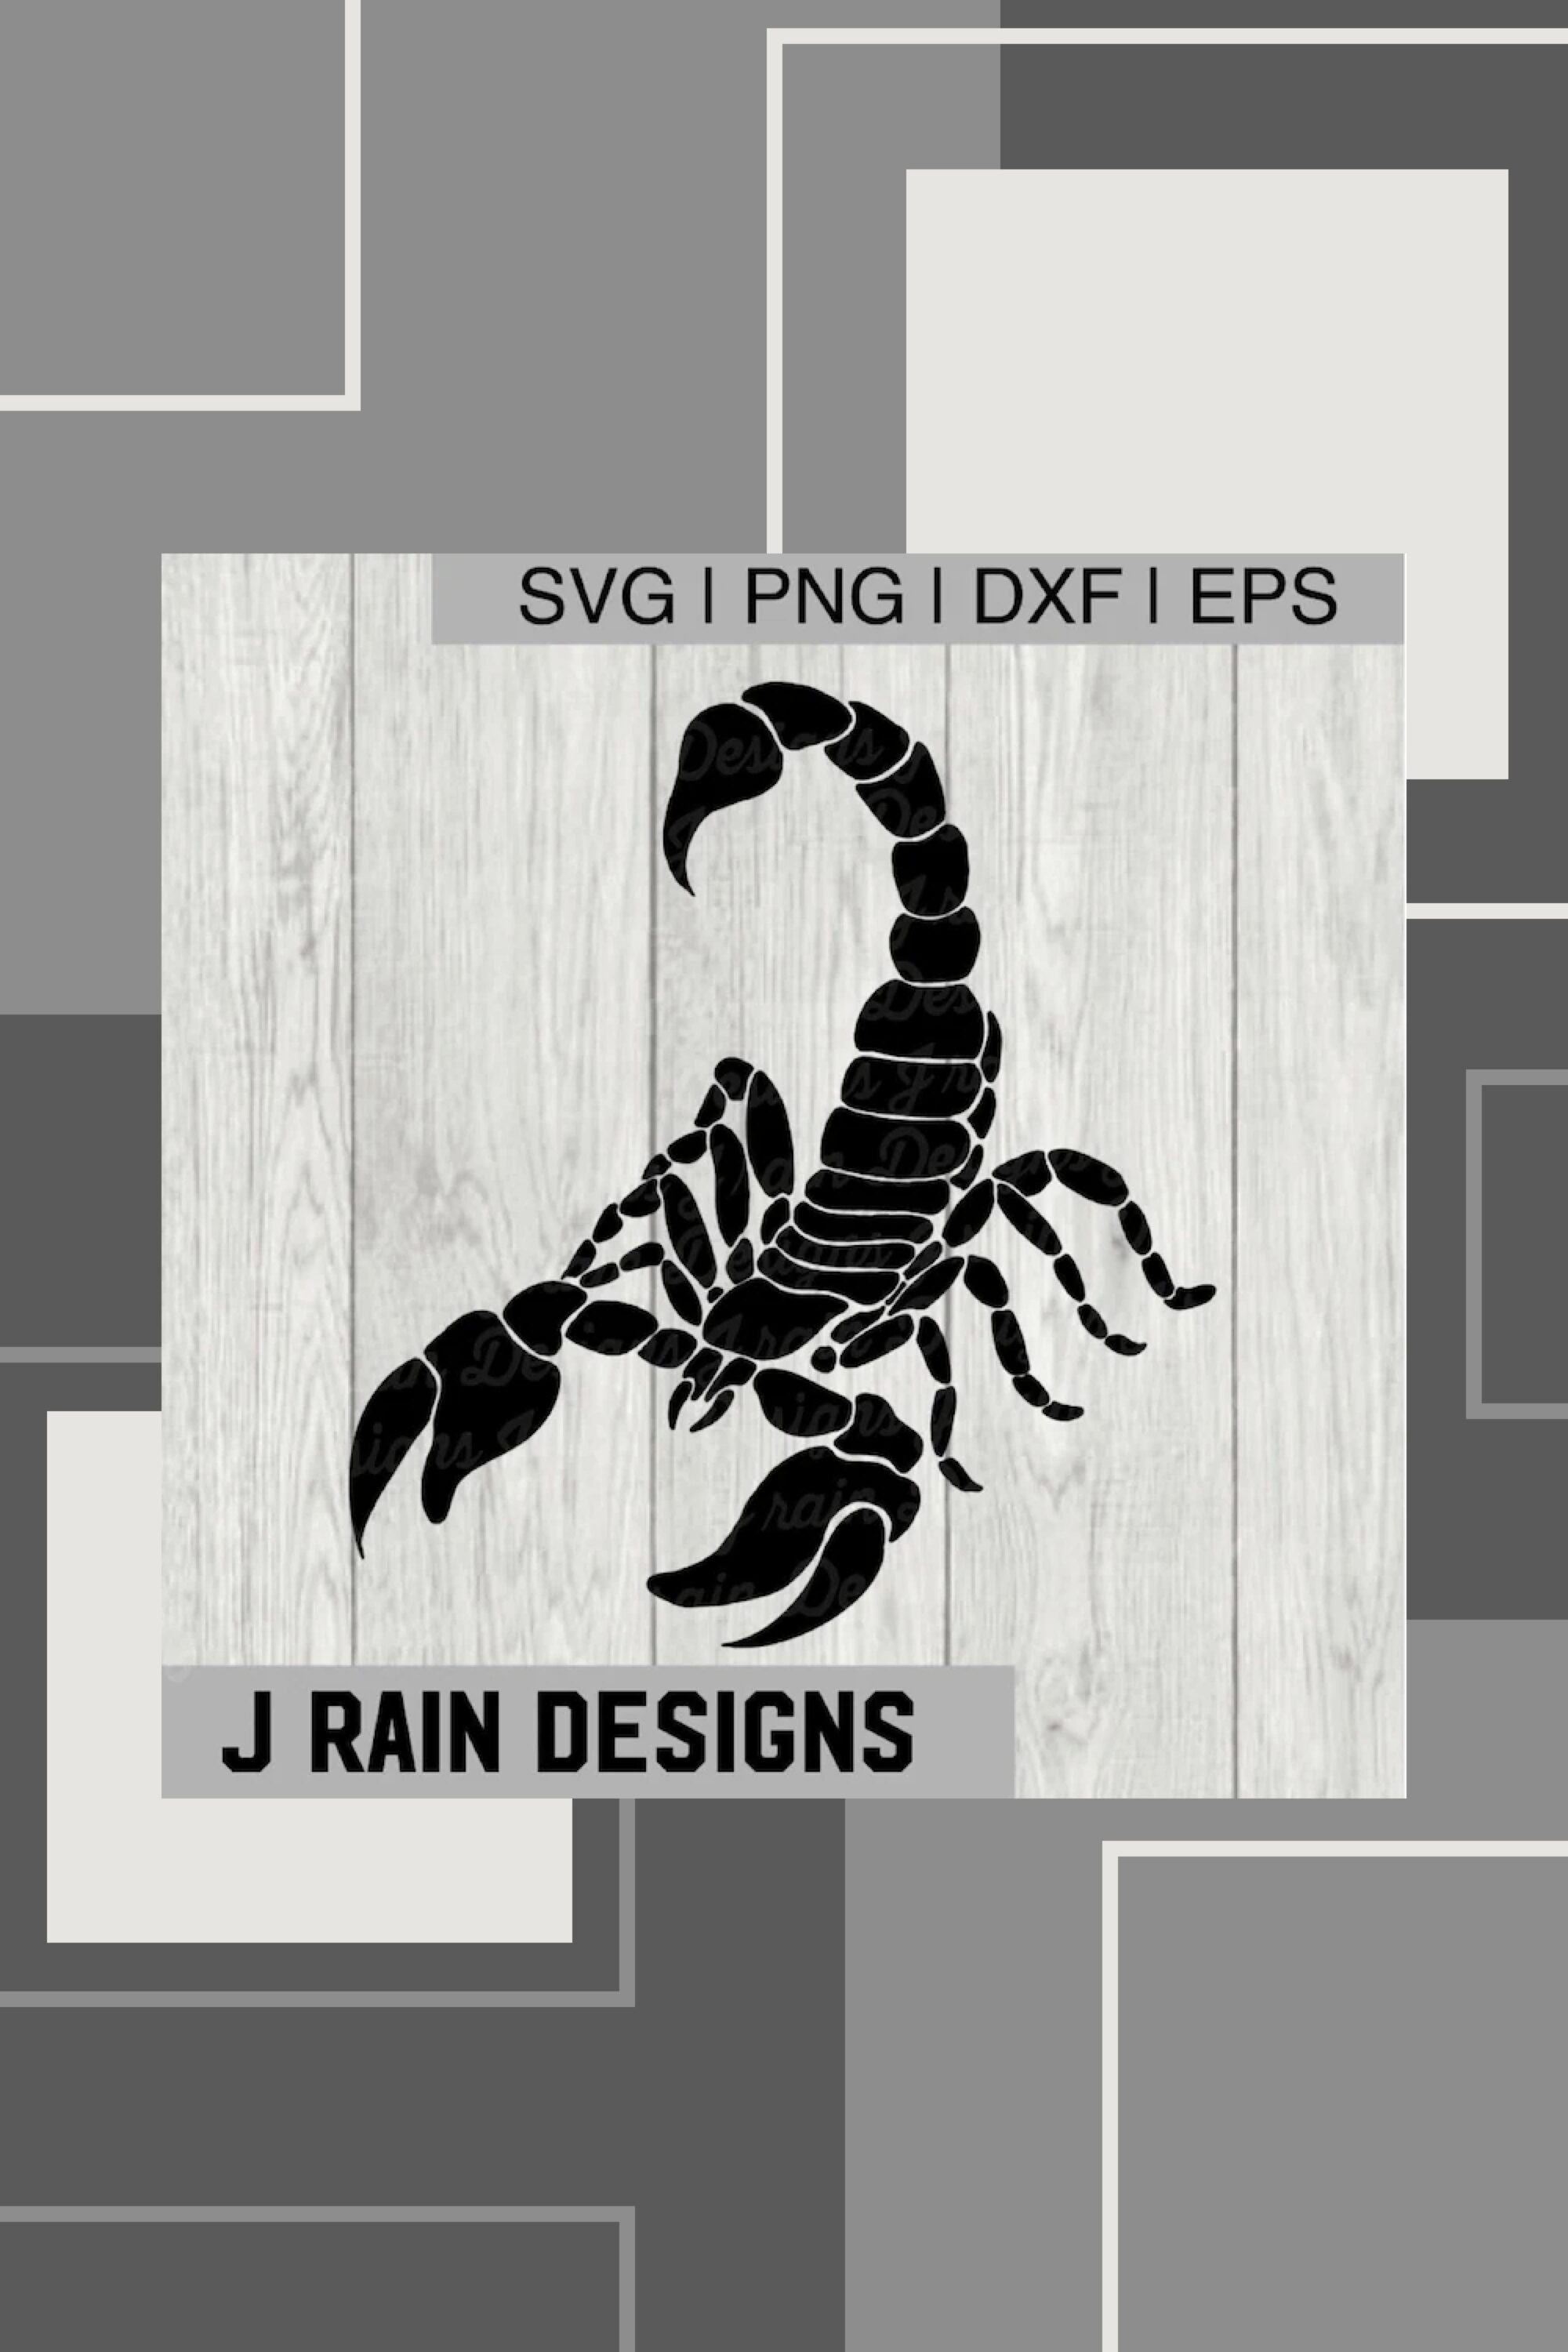 Scorpion SVG - pinterest image preview.